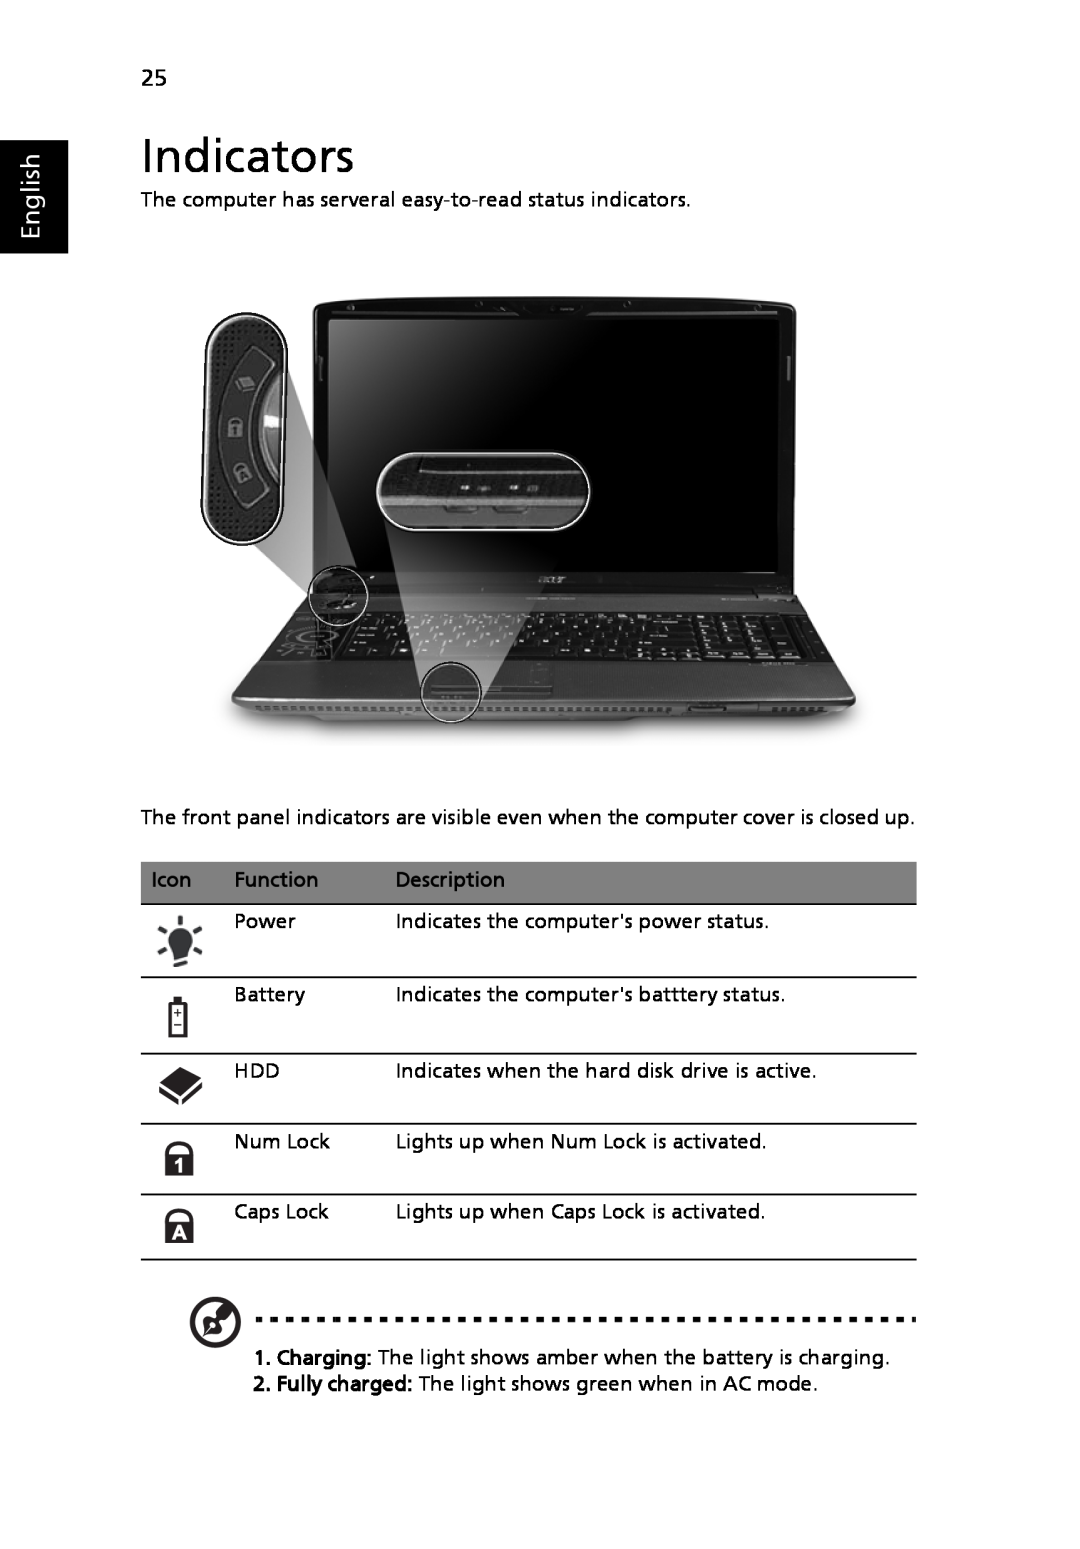 Acer 8920 Series, LE1 manual Indicators, English, Function, Description 